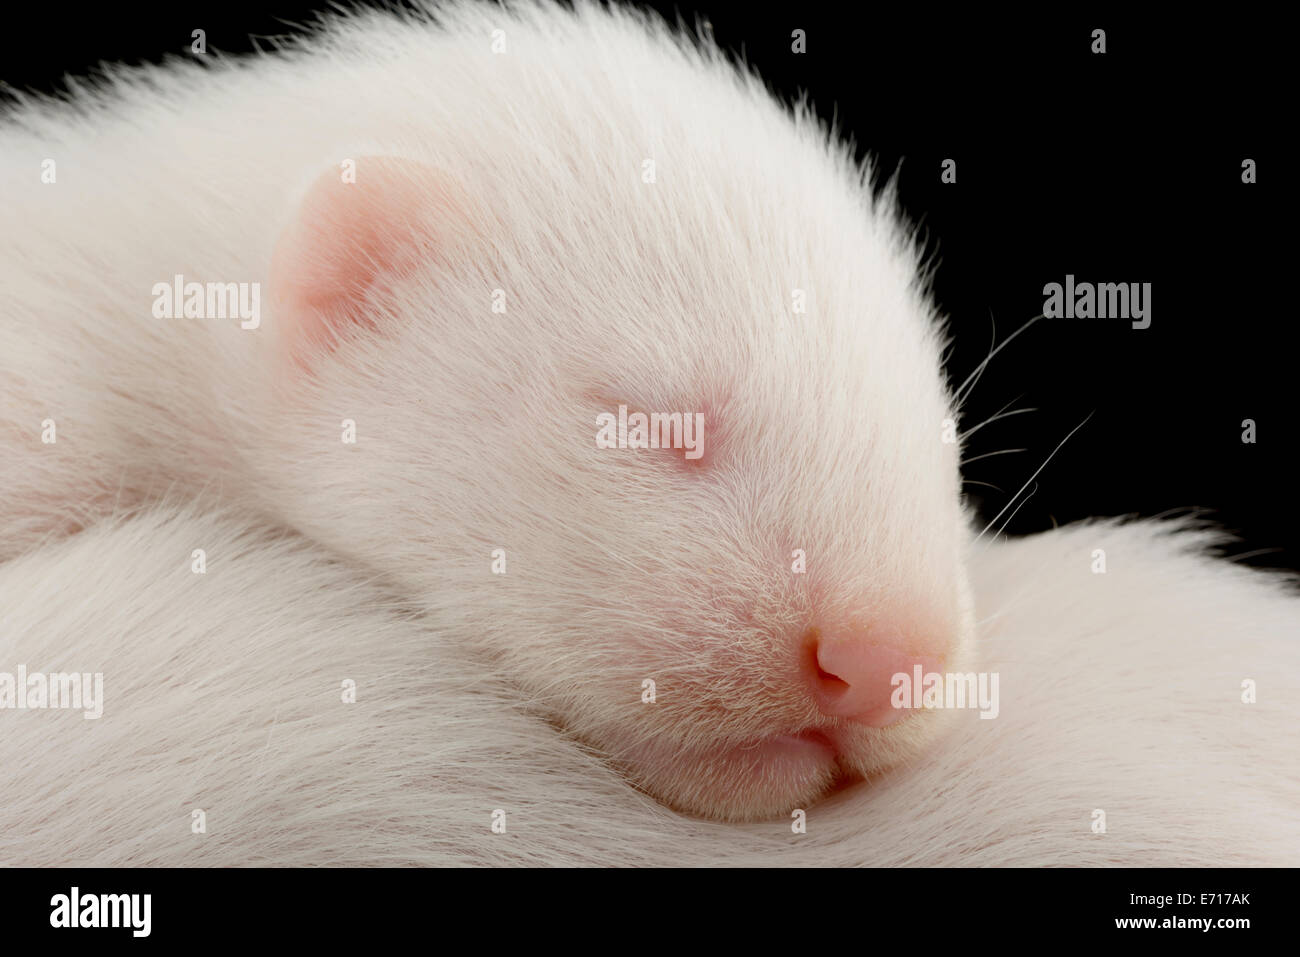 Ferrets, Mustela putorius furo, sleeping Stock Photo